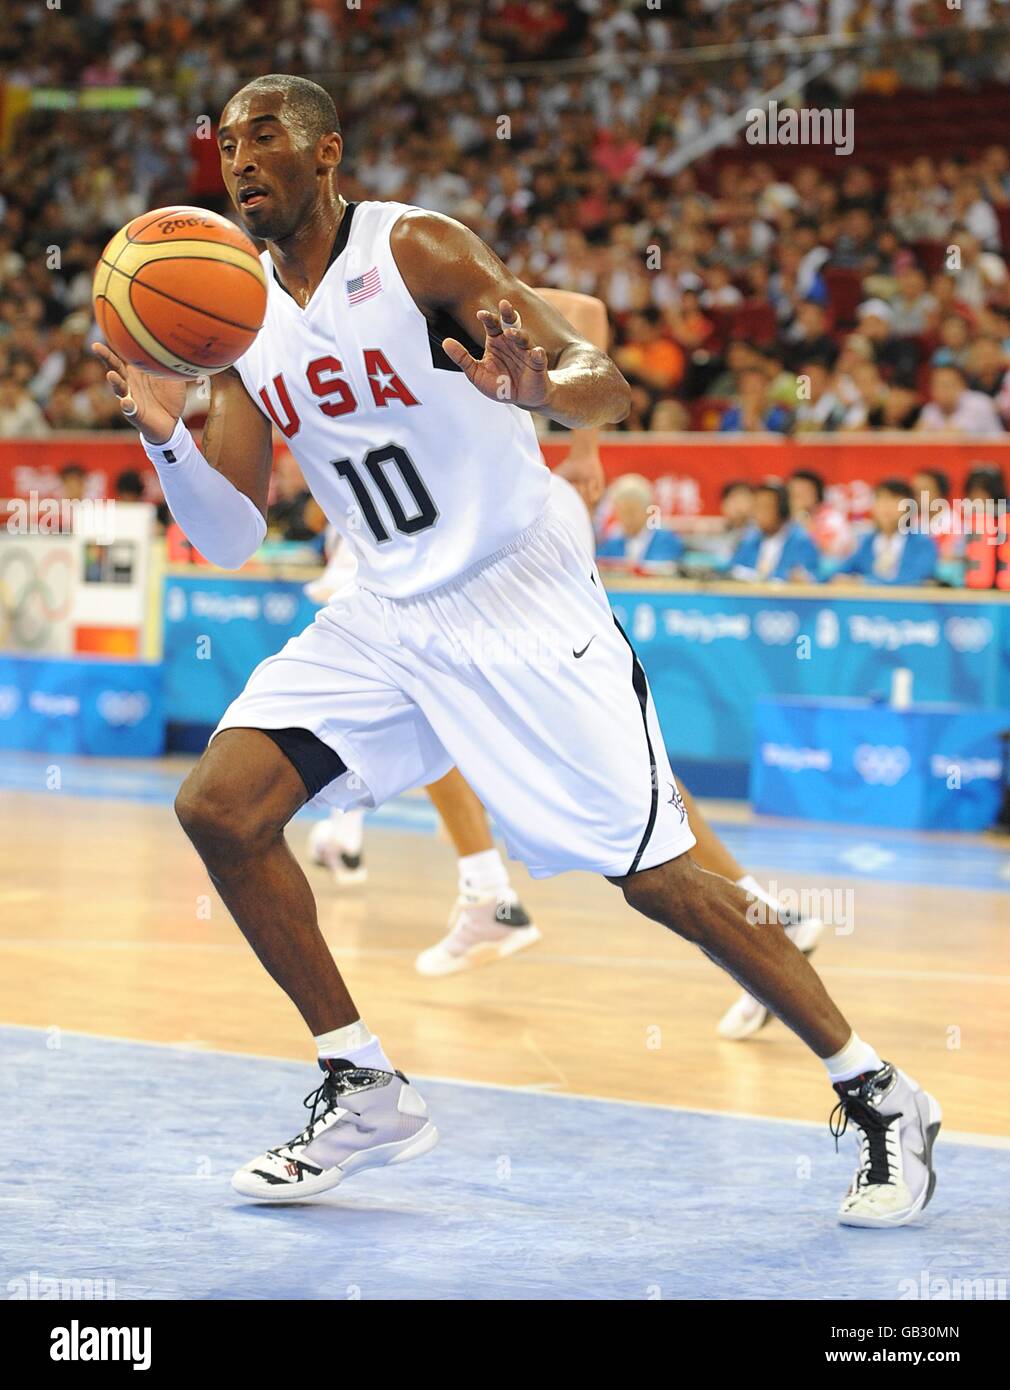 NBA Deutschland - LOS ANGELES - DECEMBER 20: Kobe Bryant #8 of the